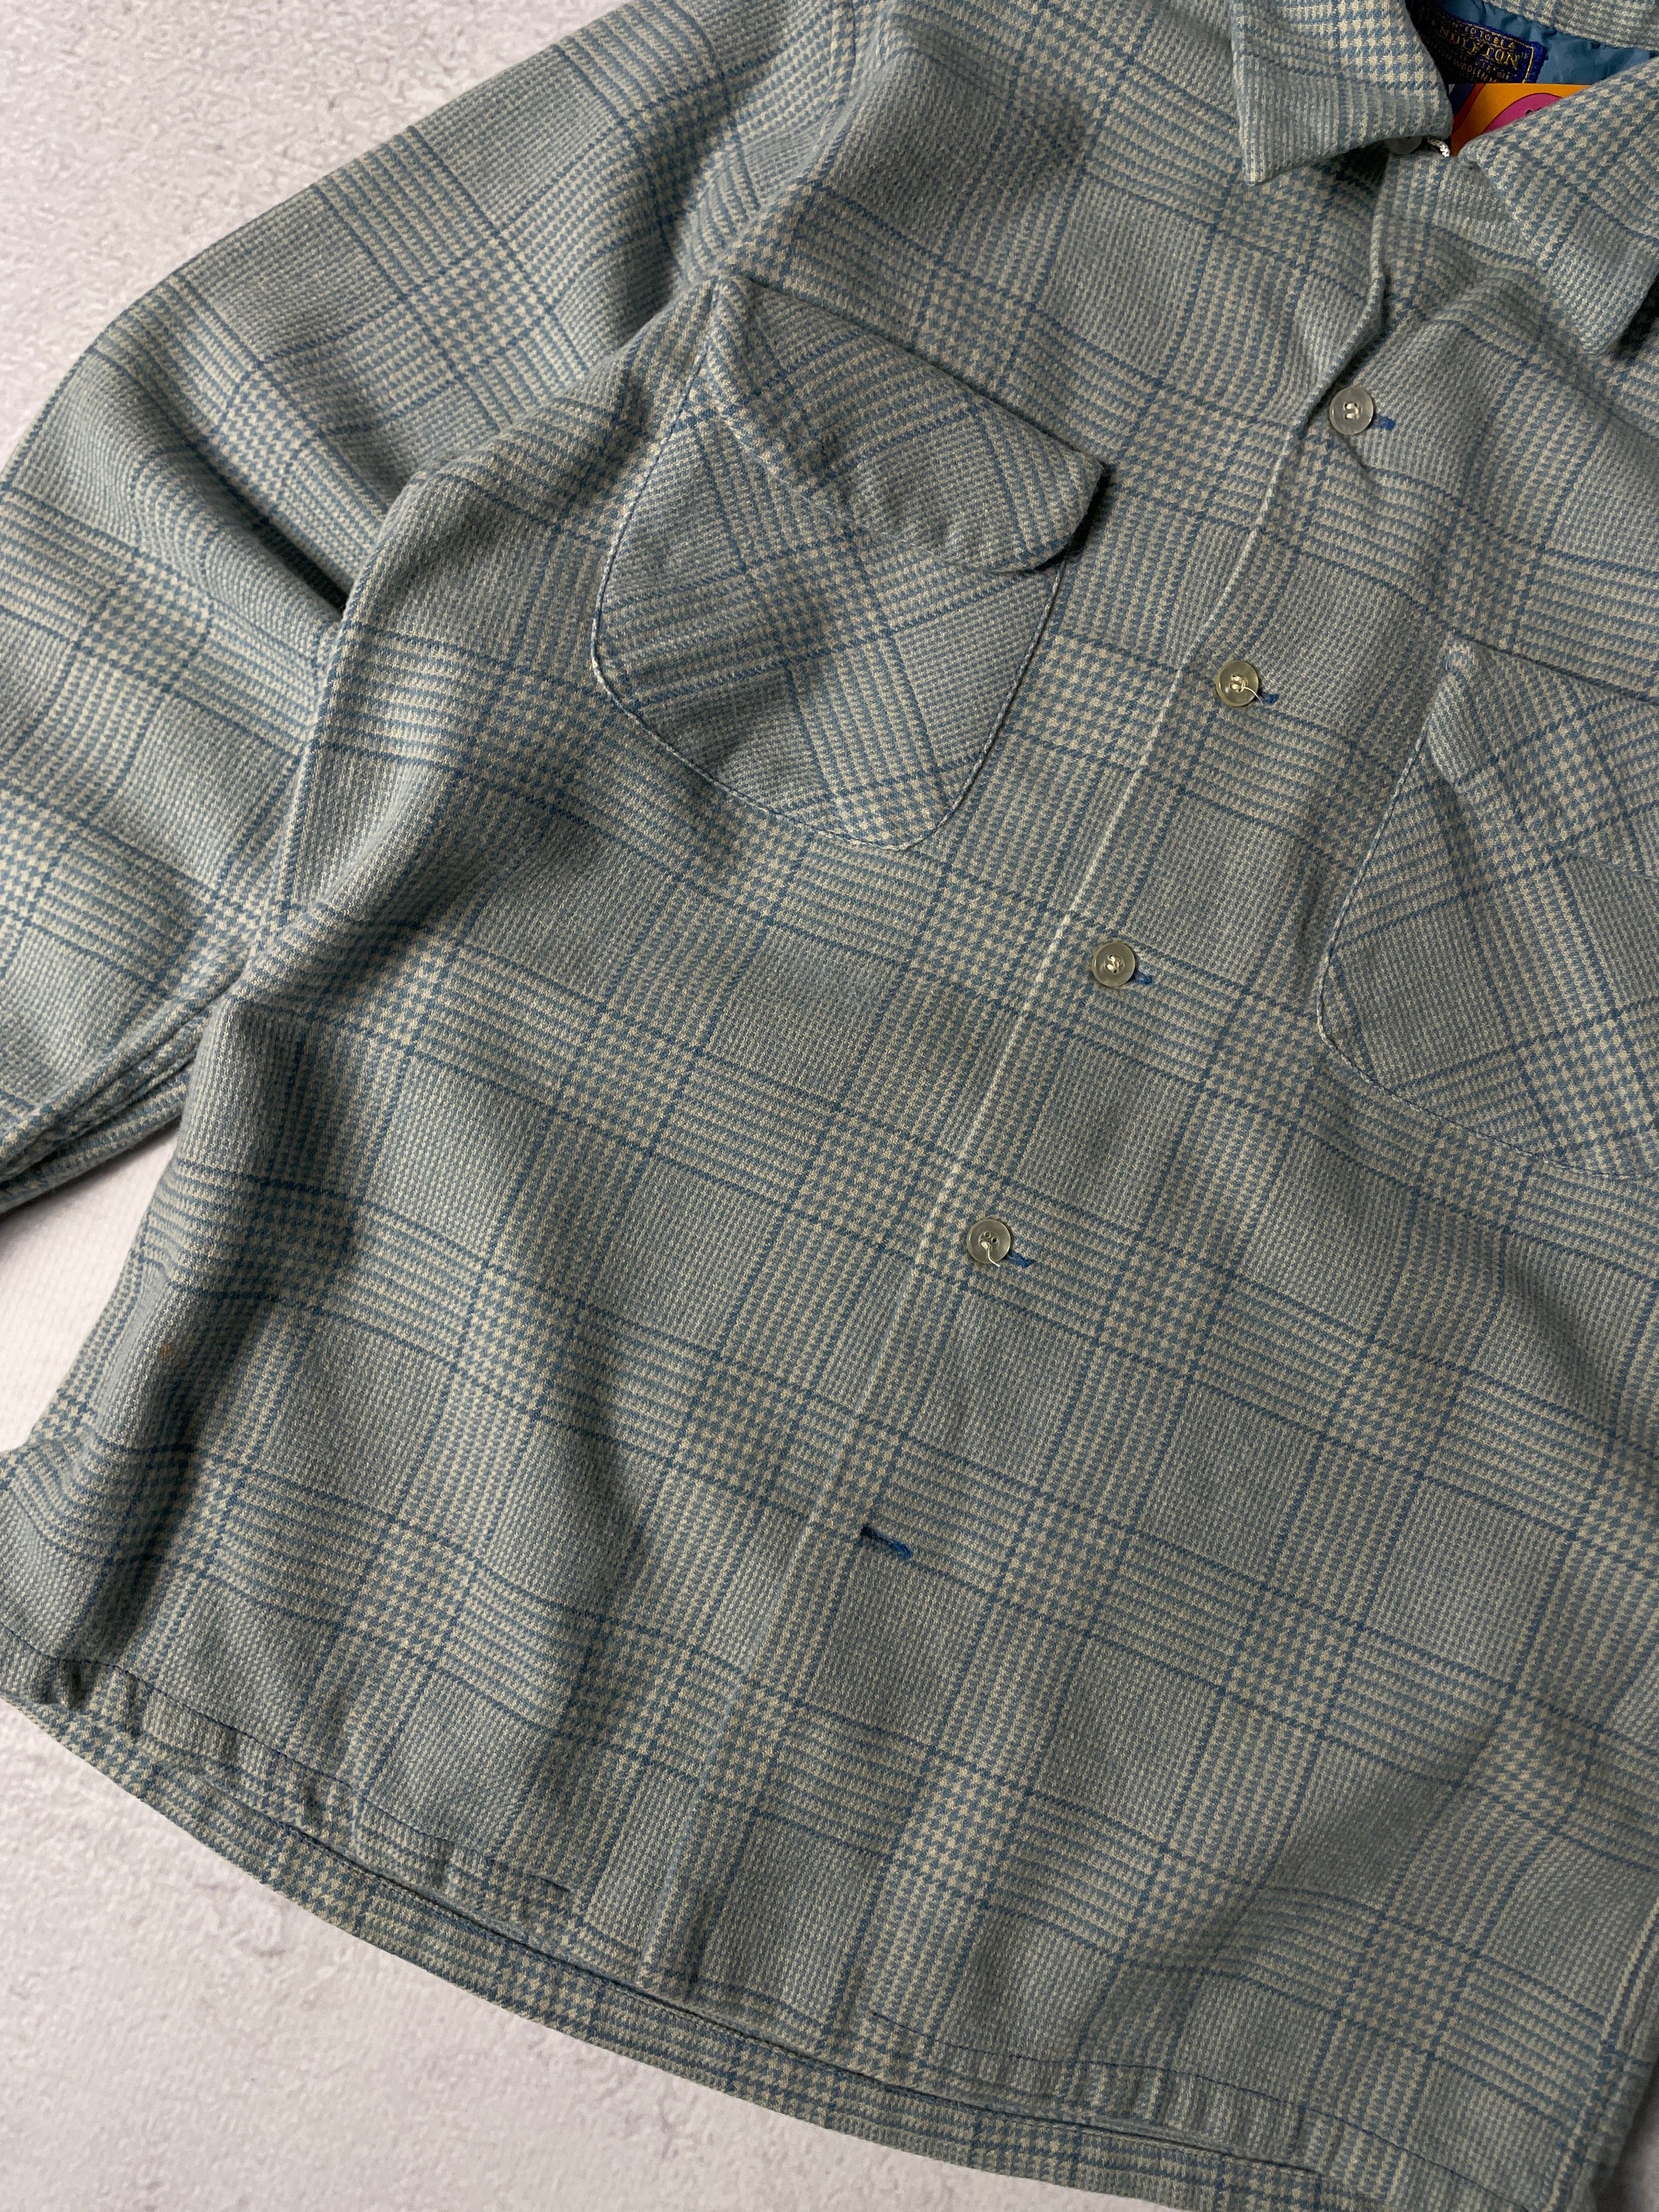 Vintage Pendleton Buttoned Shirt - Men's Medium